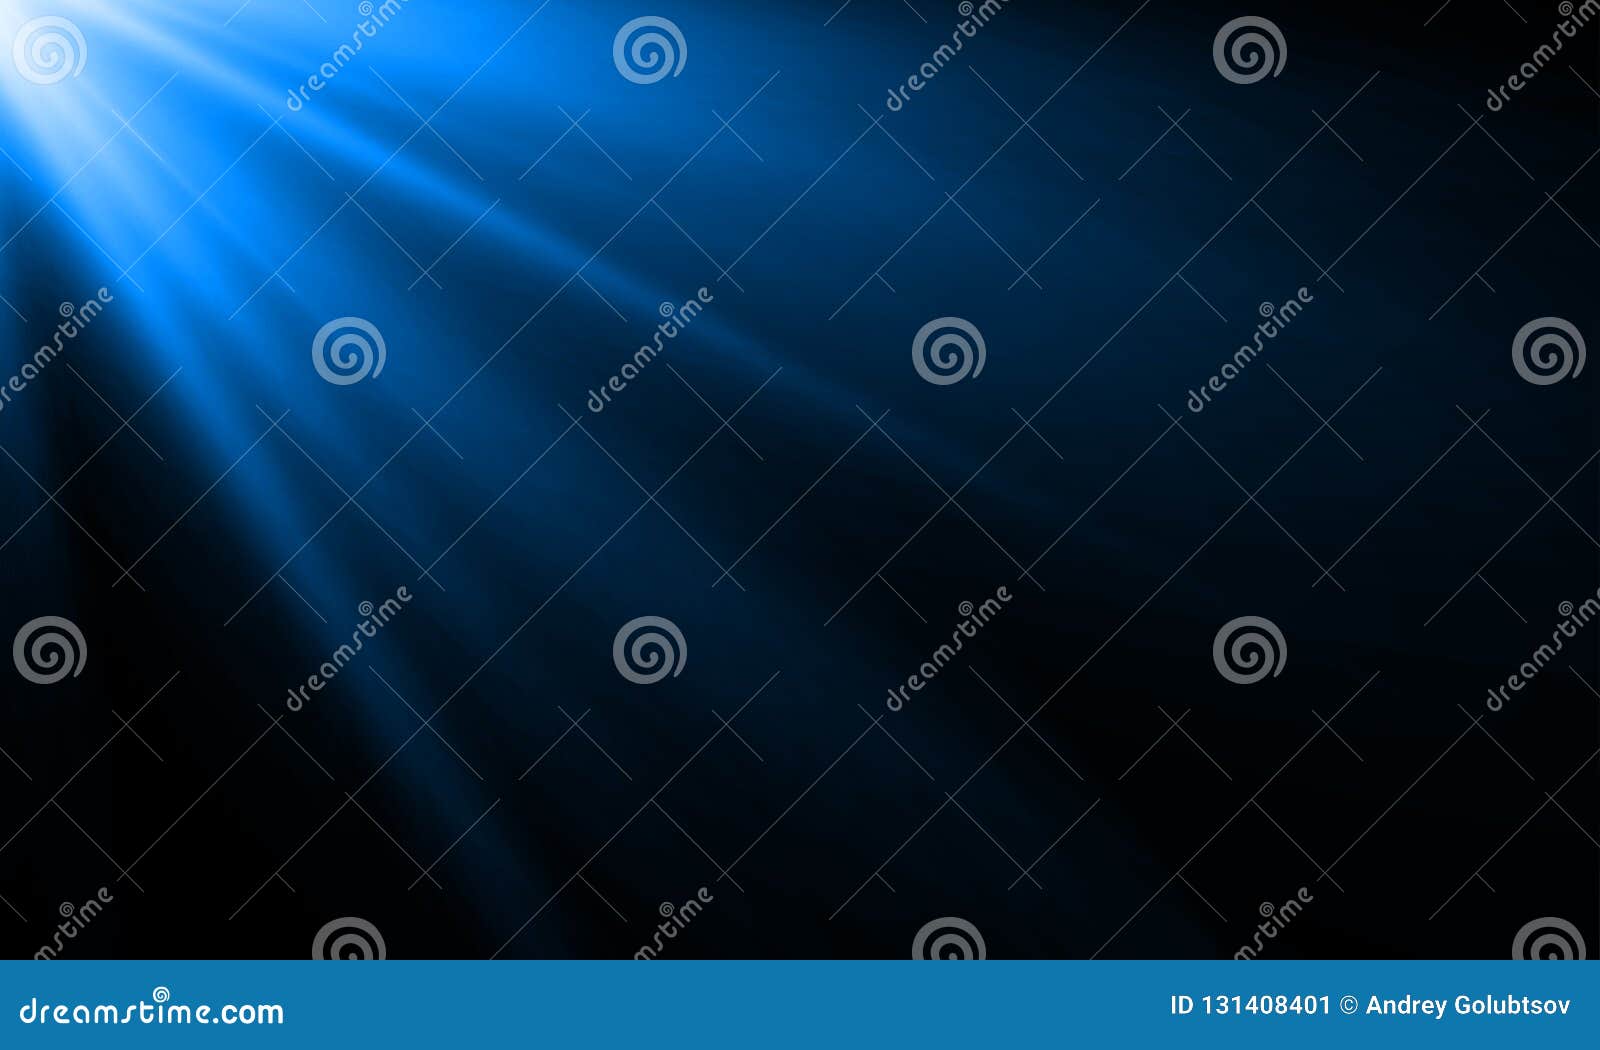 blue light ray sun beam  background. abstract neon blue light flash spotlight backdrop sunlight shine background